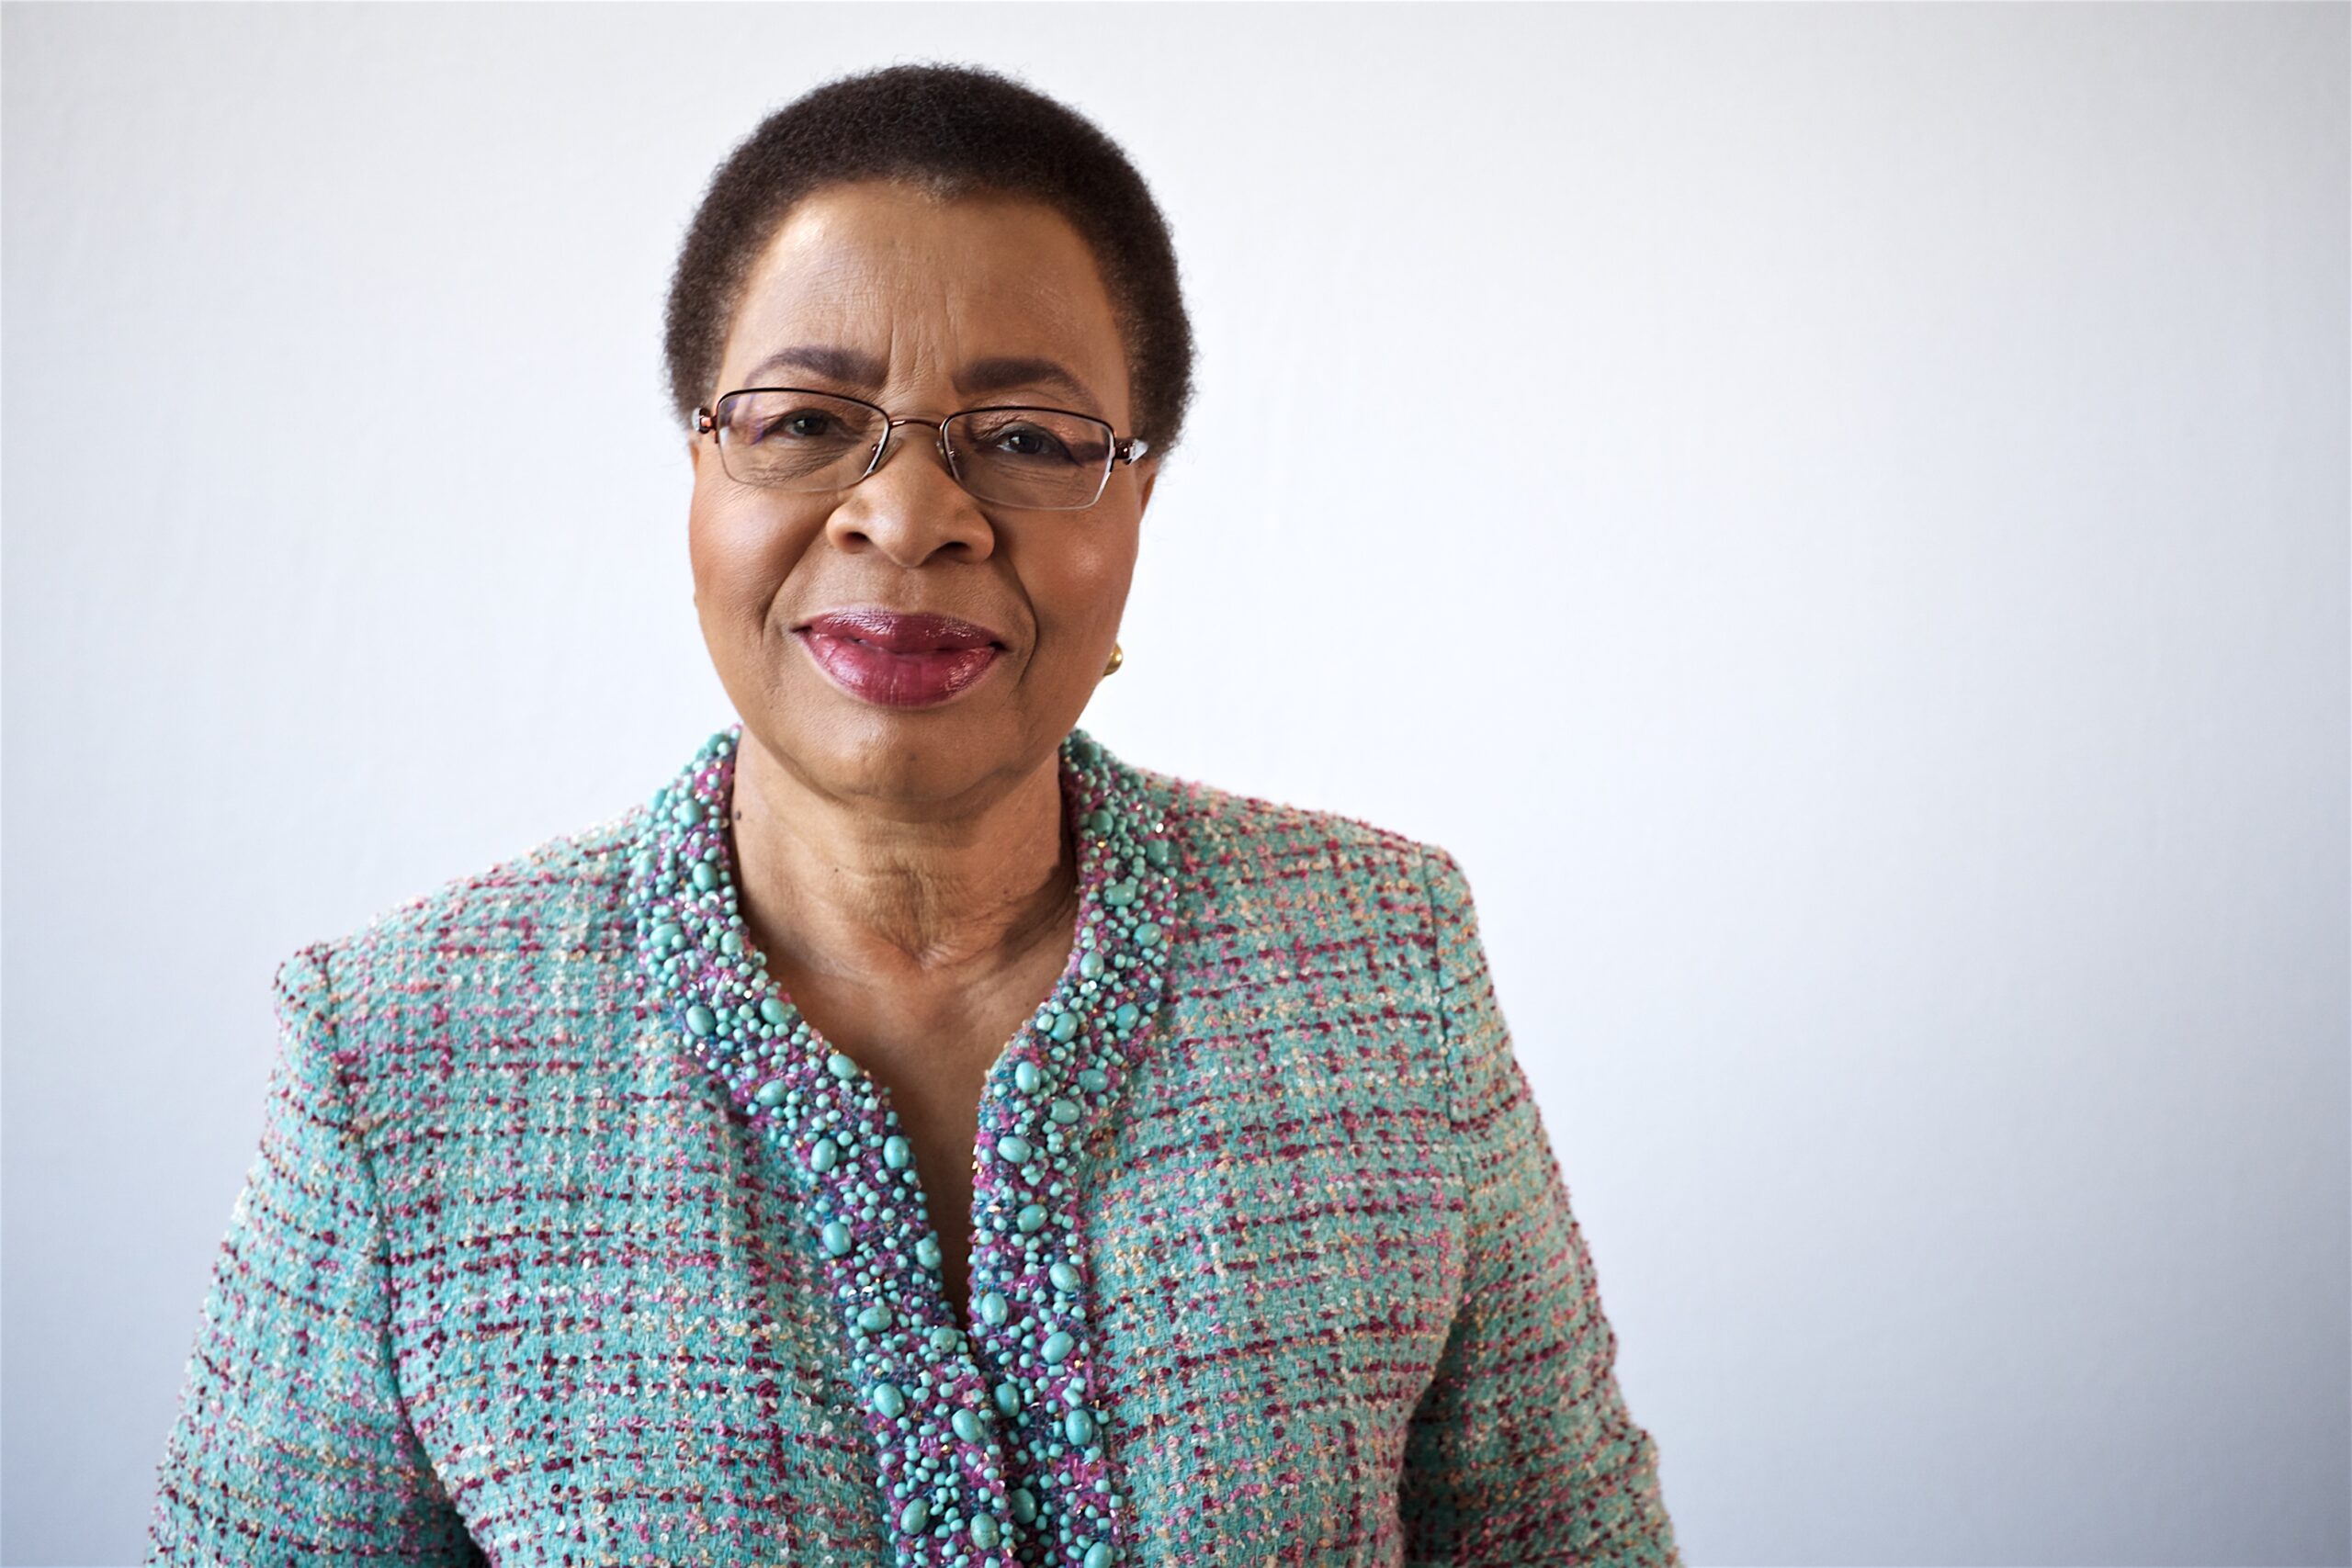 Mrs Graça Machel, Founder, Graça Machel Trust and the Foundation for Community Development